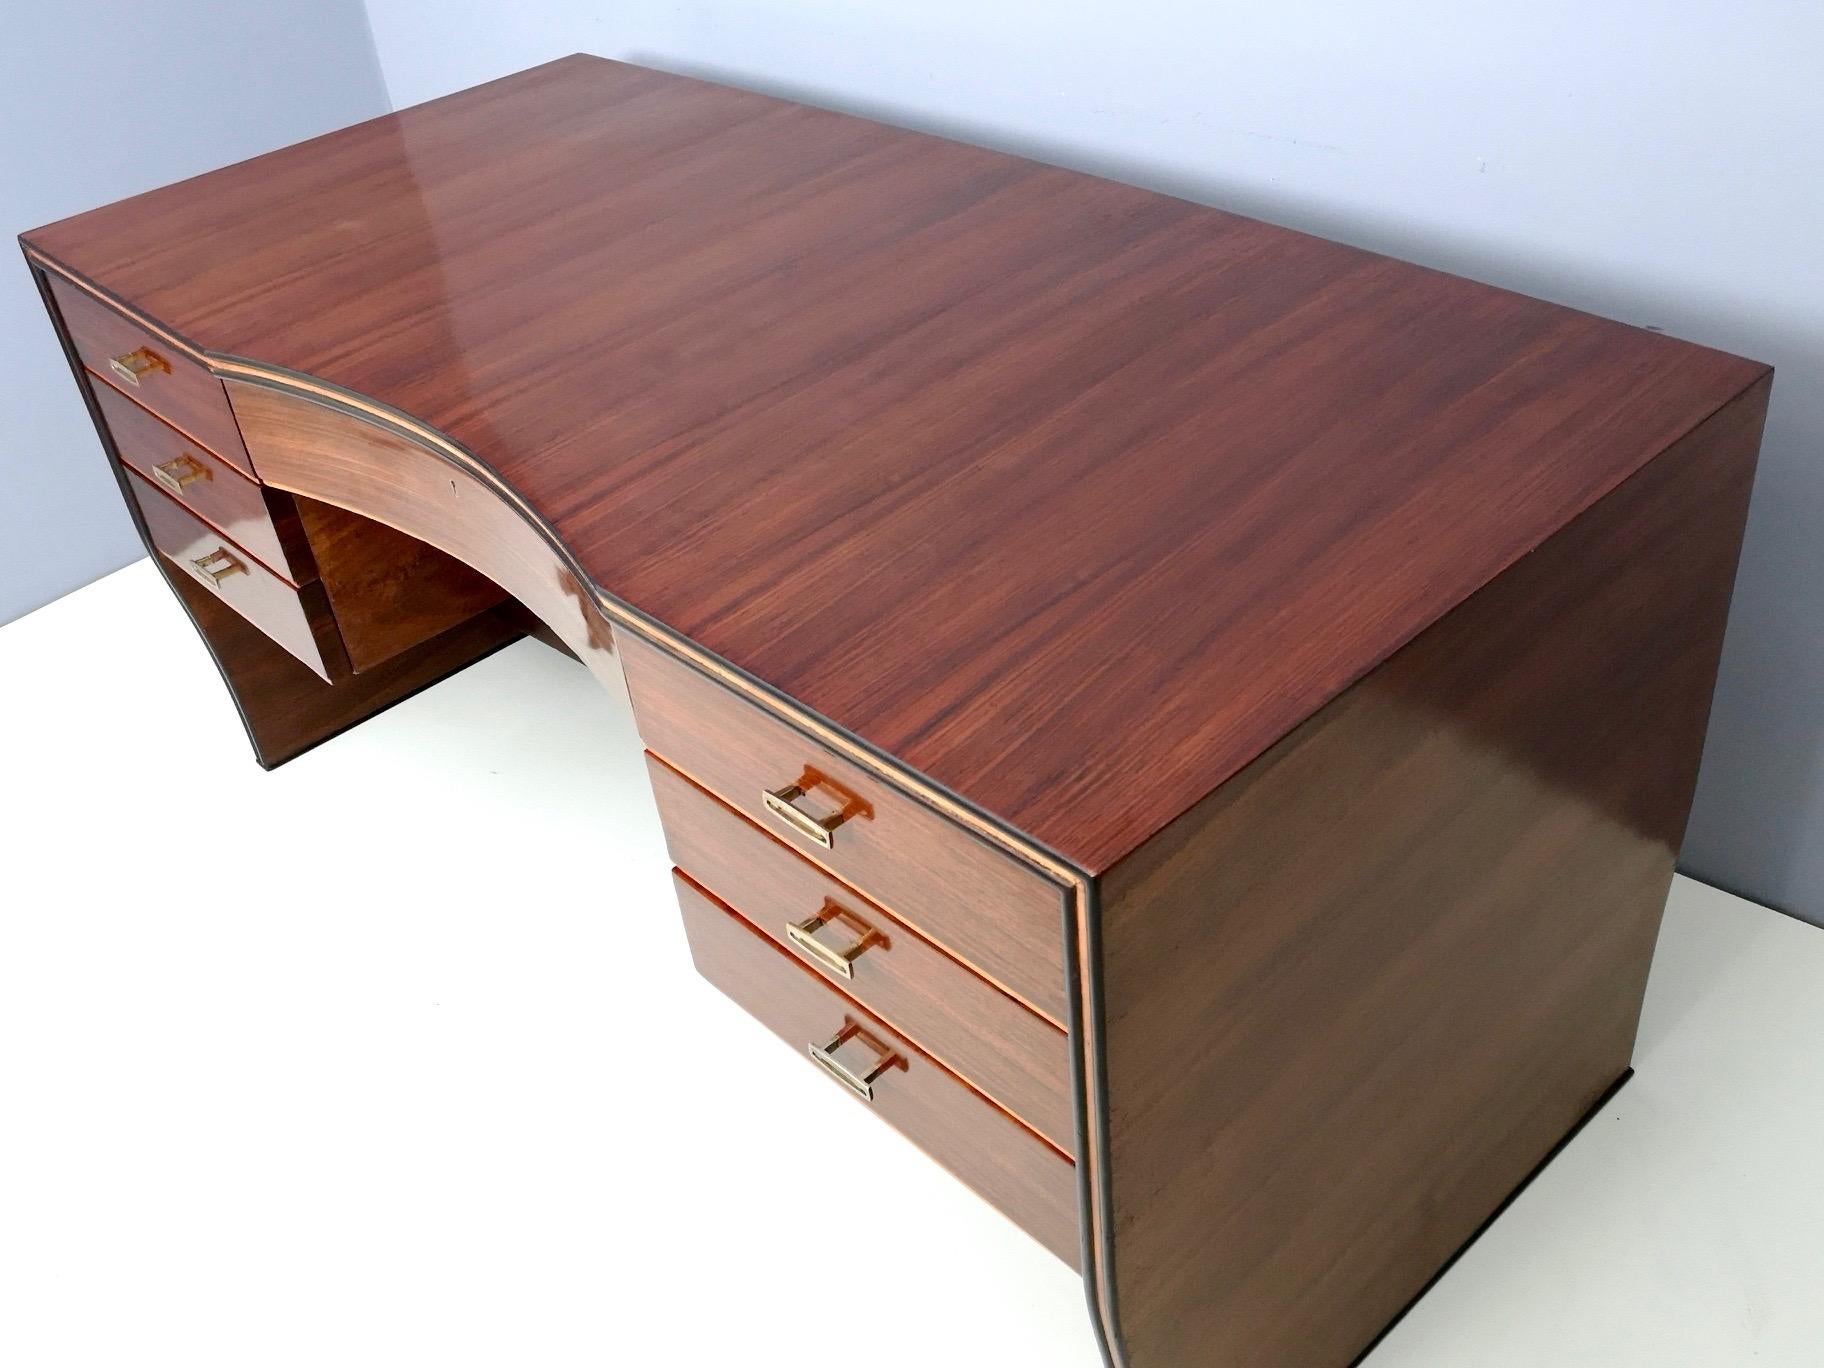 Rare Wooden Desk by Osvaldo Borsani for Arredamenti Borsani Varedo, Italy 1